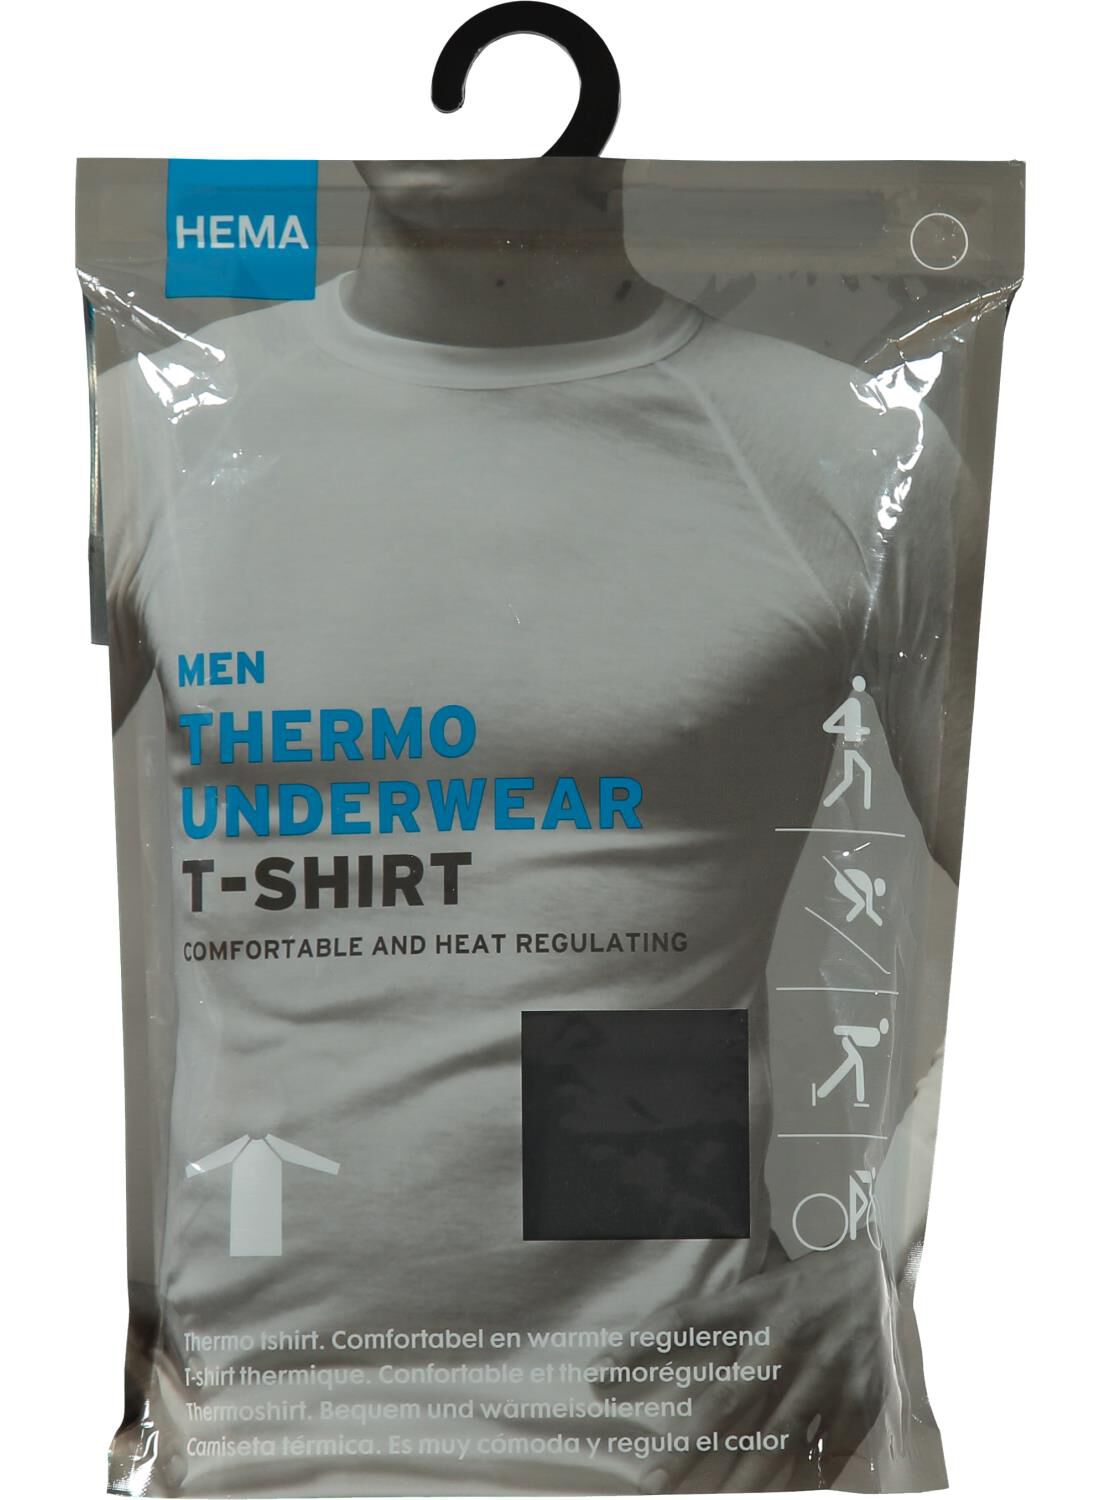 Hema Thermoshirt Kind Best Sale, 58% OFF | www.ingeniovirtual.com